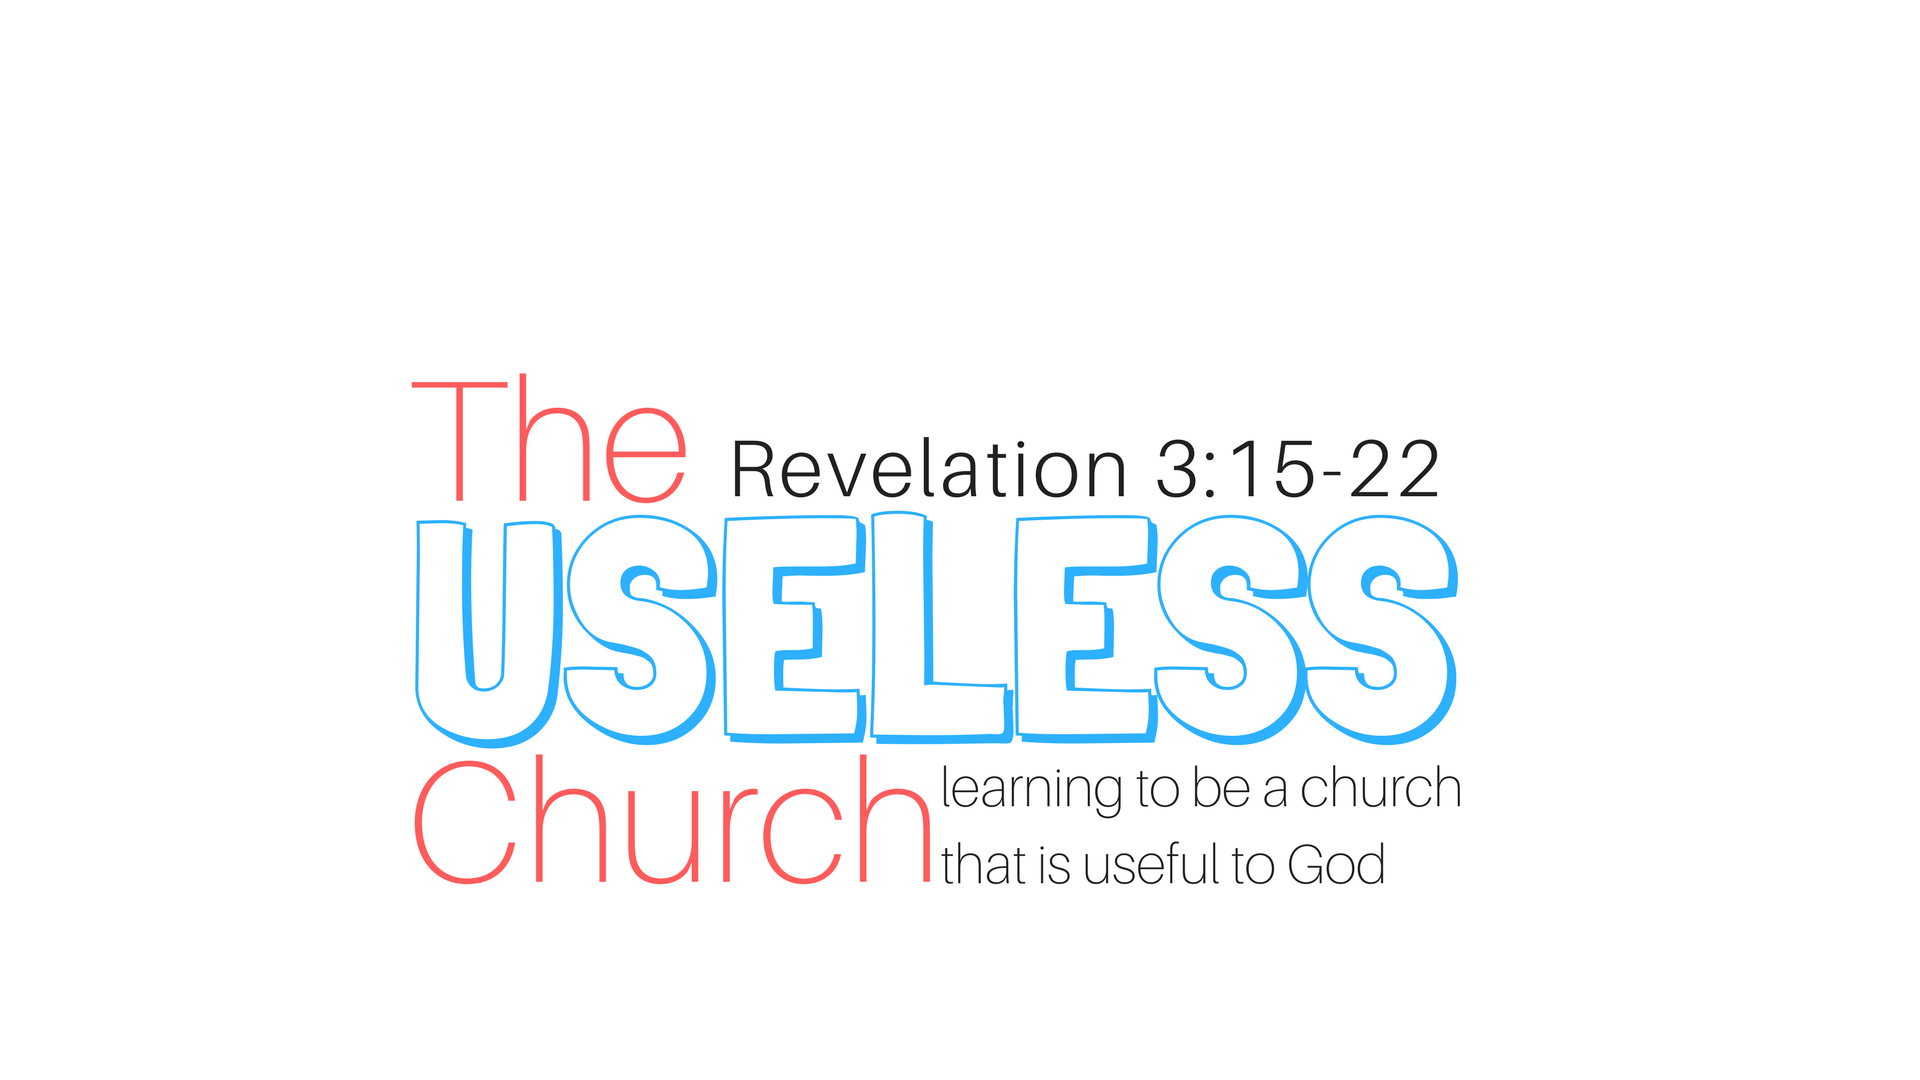 The Useless Church | Robert Varner | 03-12-17